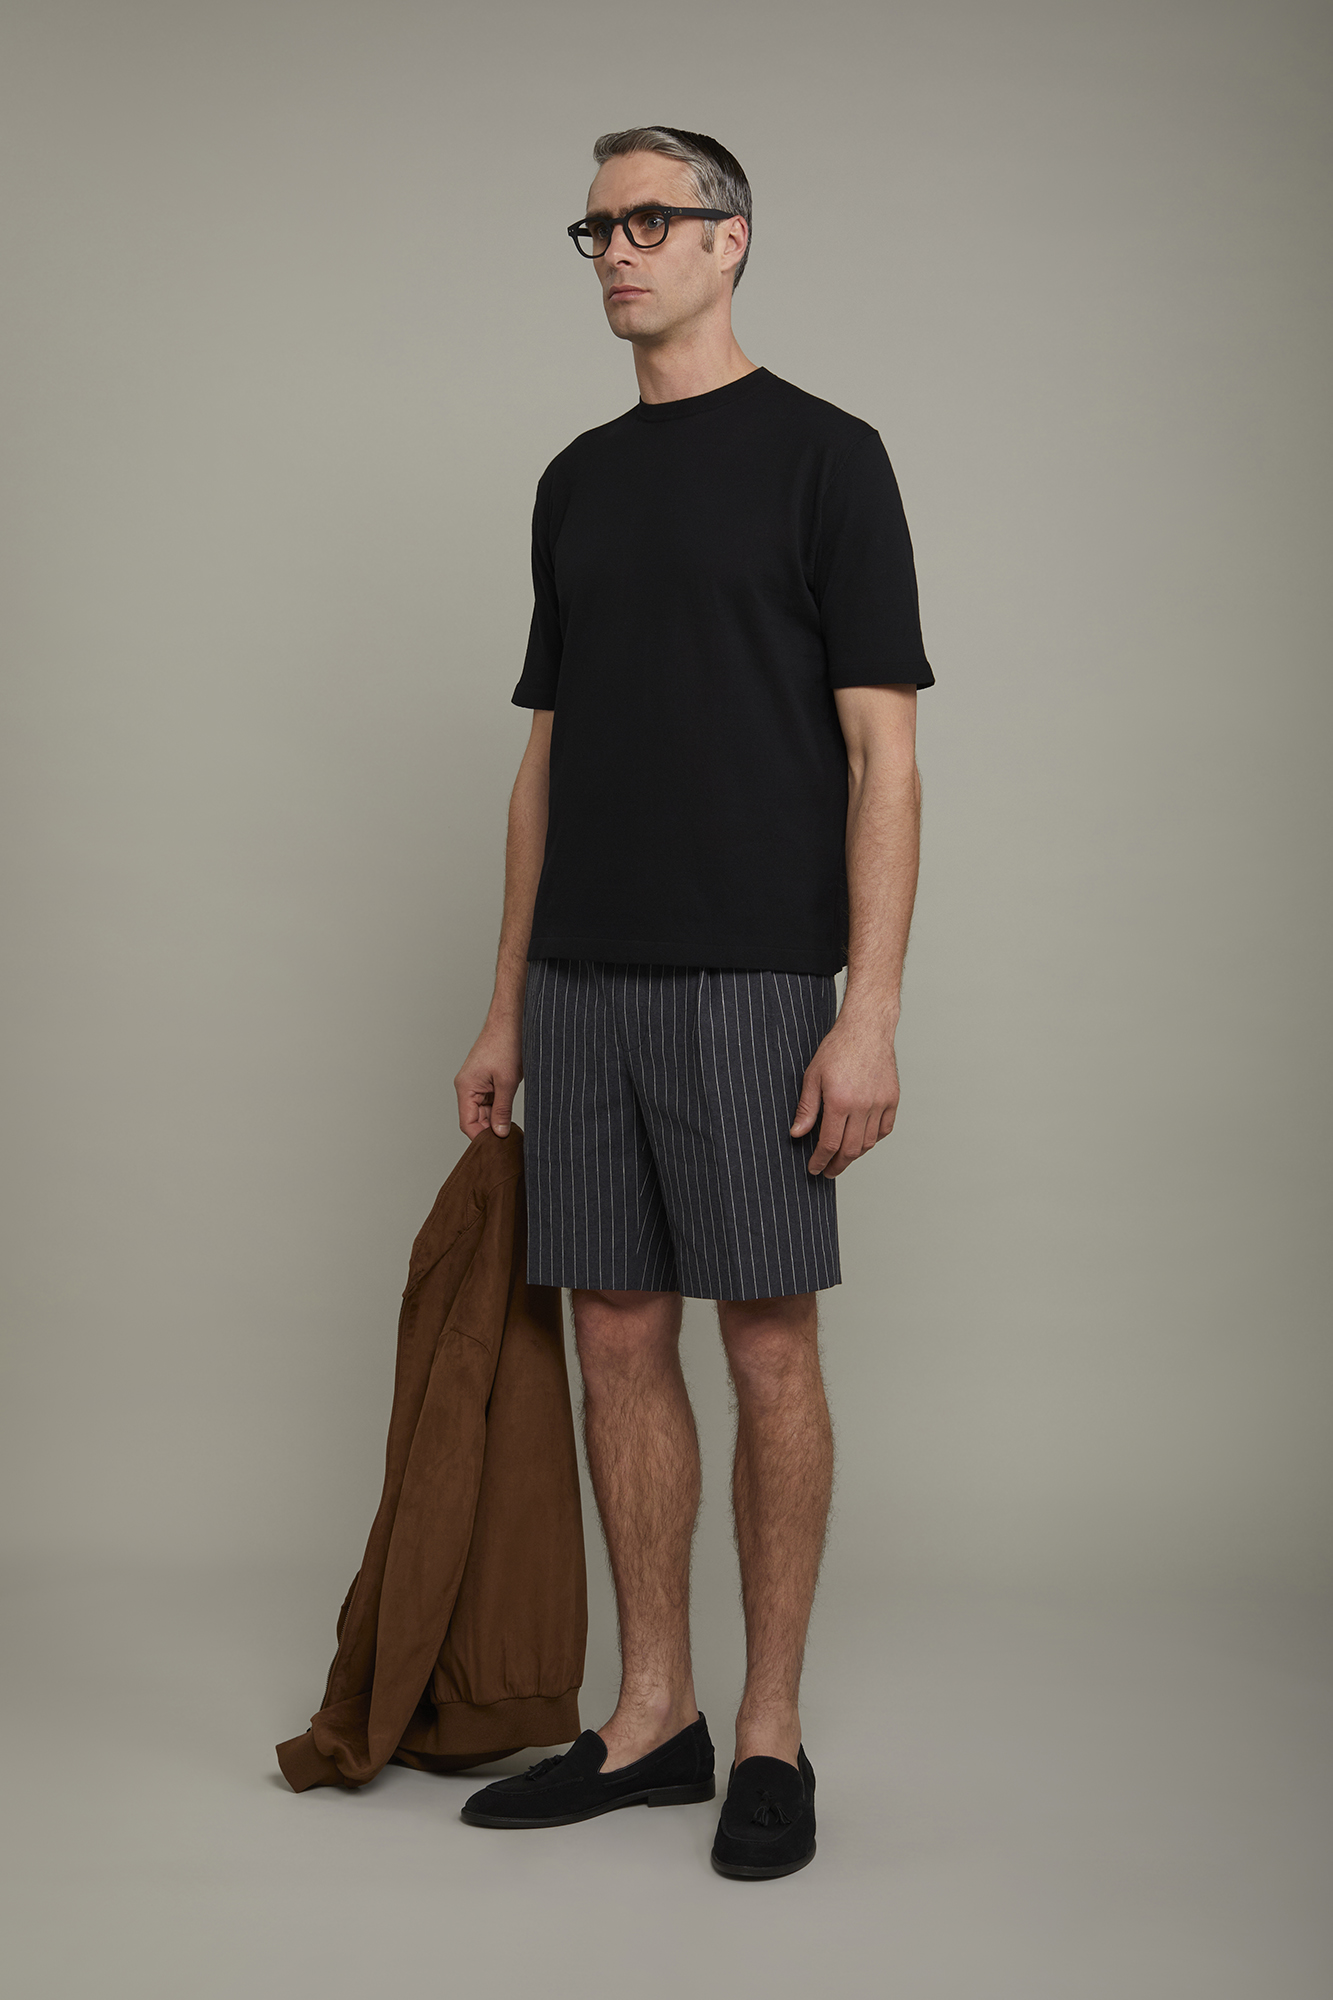 Men's knitted t-shirt 100% cotton short-sleeved regular fit image number null